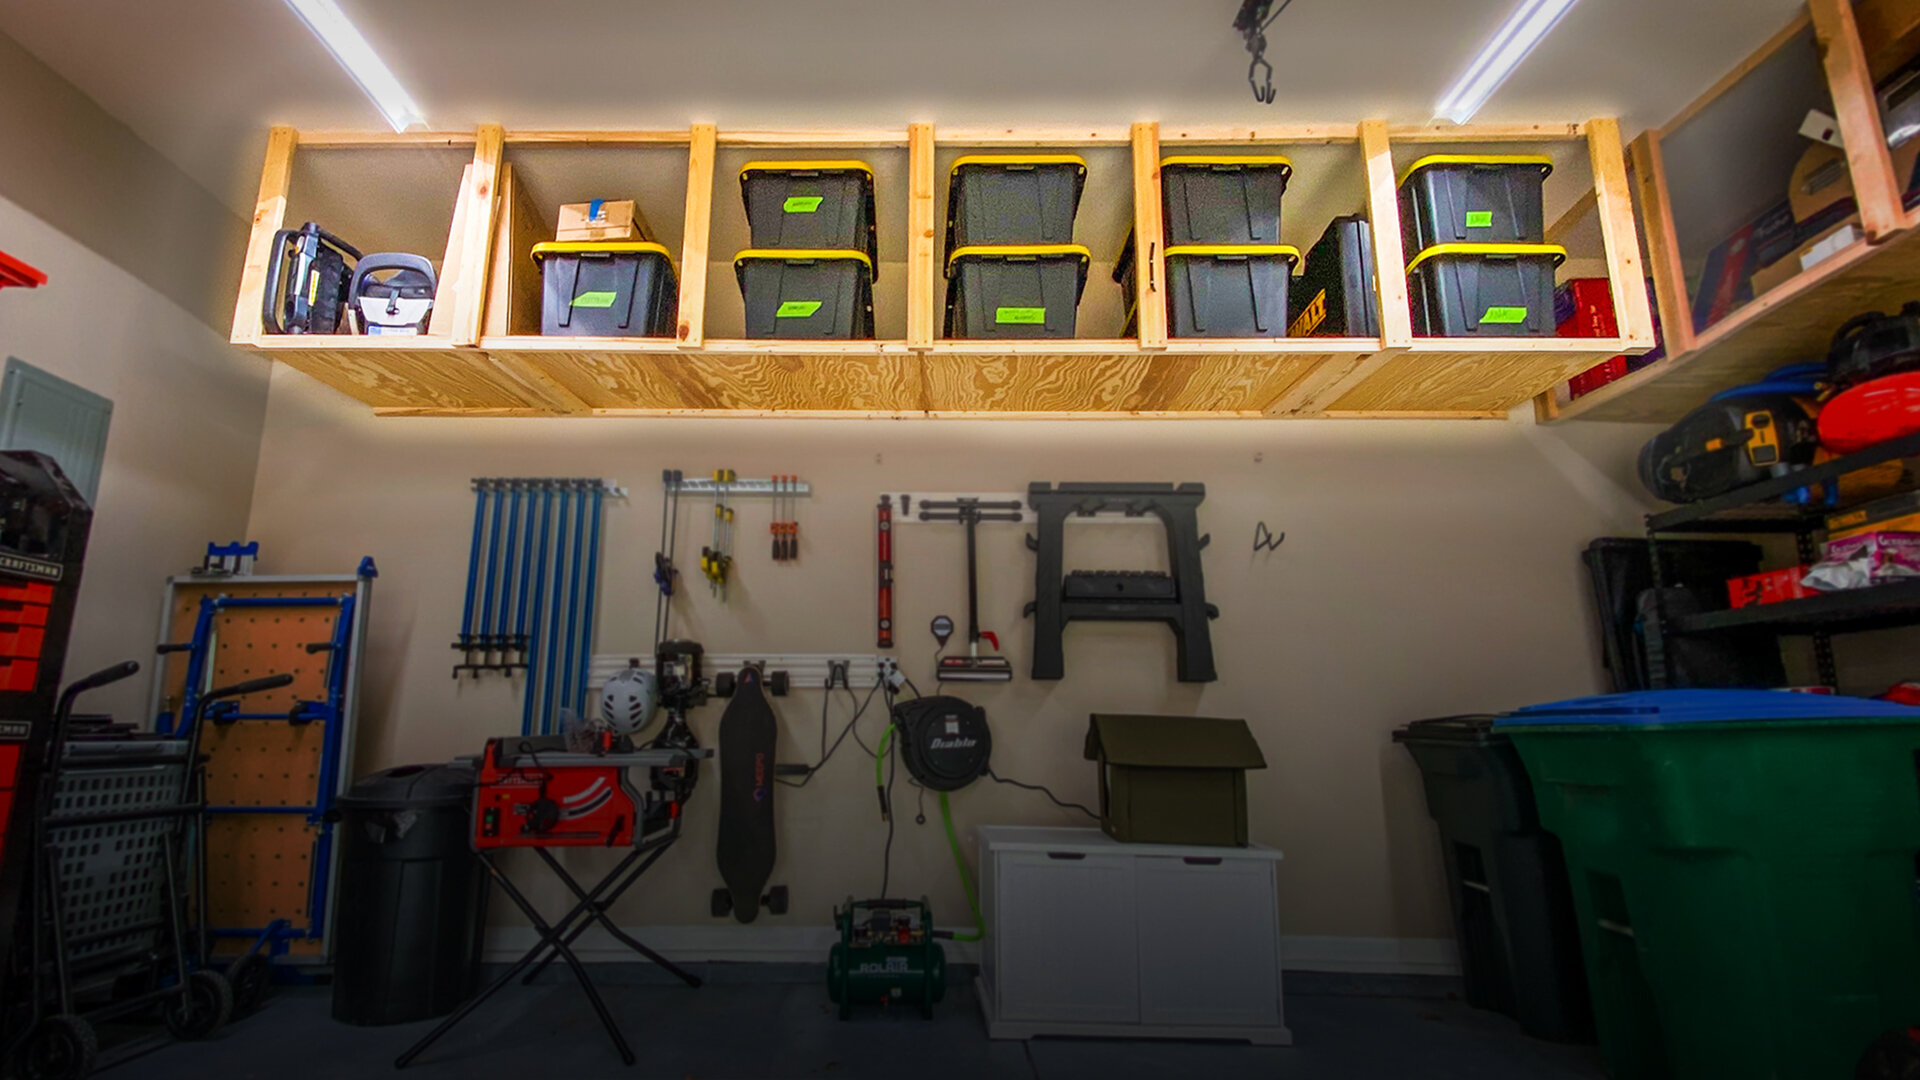 How To Build Diy Garage Storage Shelves, How To Build Hanging Shelves For Garage